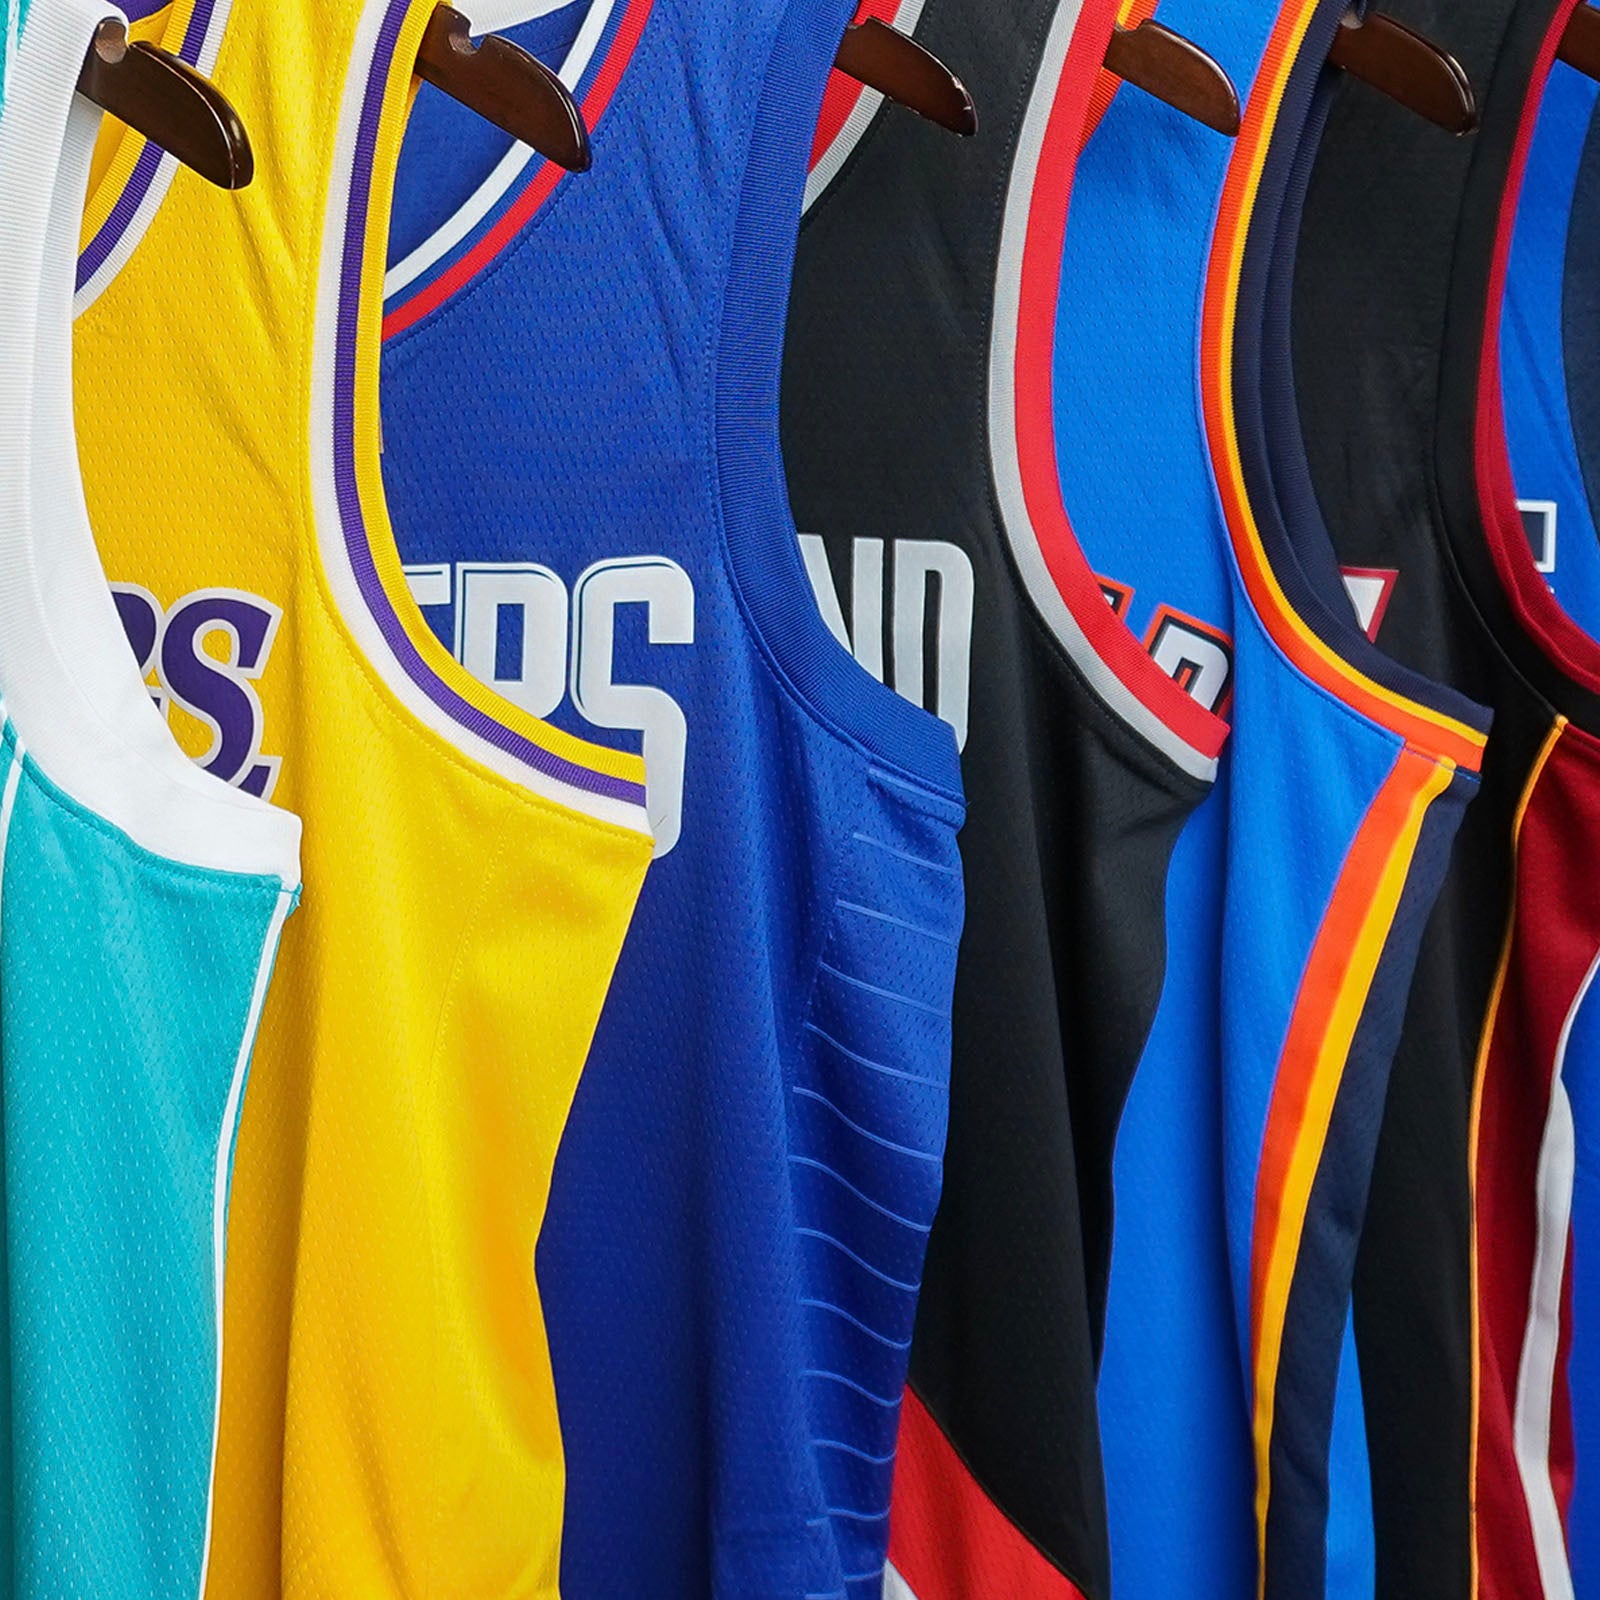 Nike NBA Icon Edition Swingman Jersey - Kawhi Leonard Los Angeles Clippers-  Basketball Store